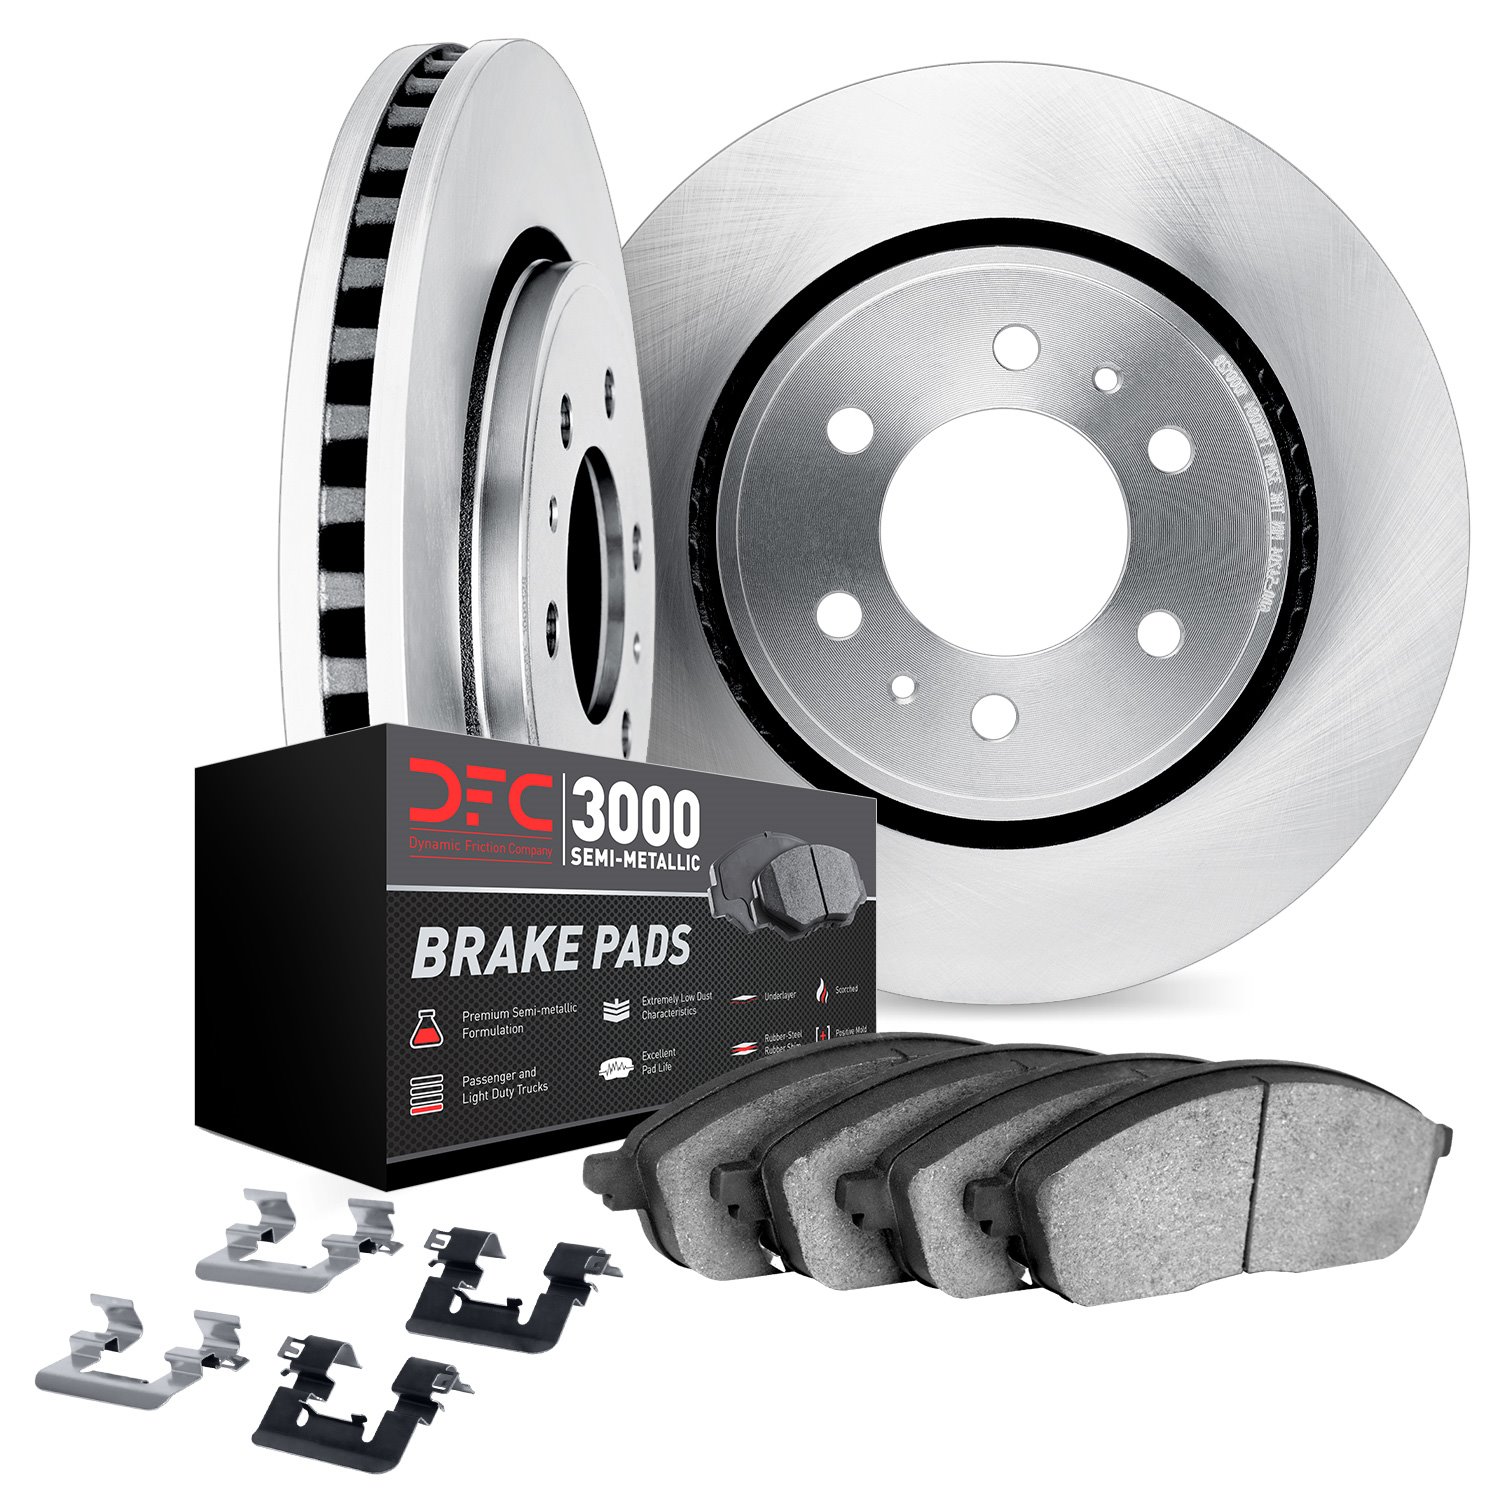 5112-67121 Slotted Brake Rotors with 3000-Series Semi-Metallic Brake Pads Kit & Hardware [Silver], Fits Select Infiniti/Nissan,